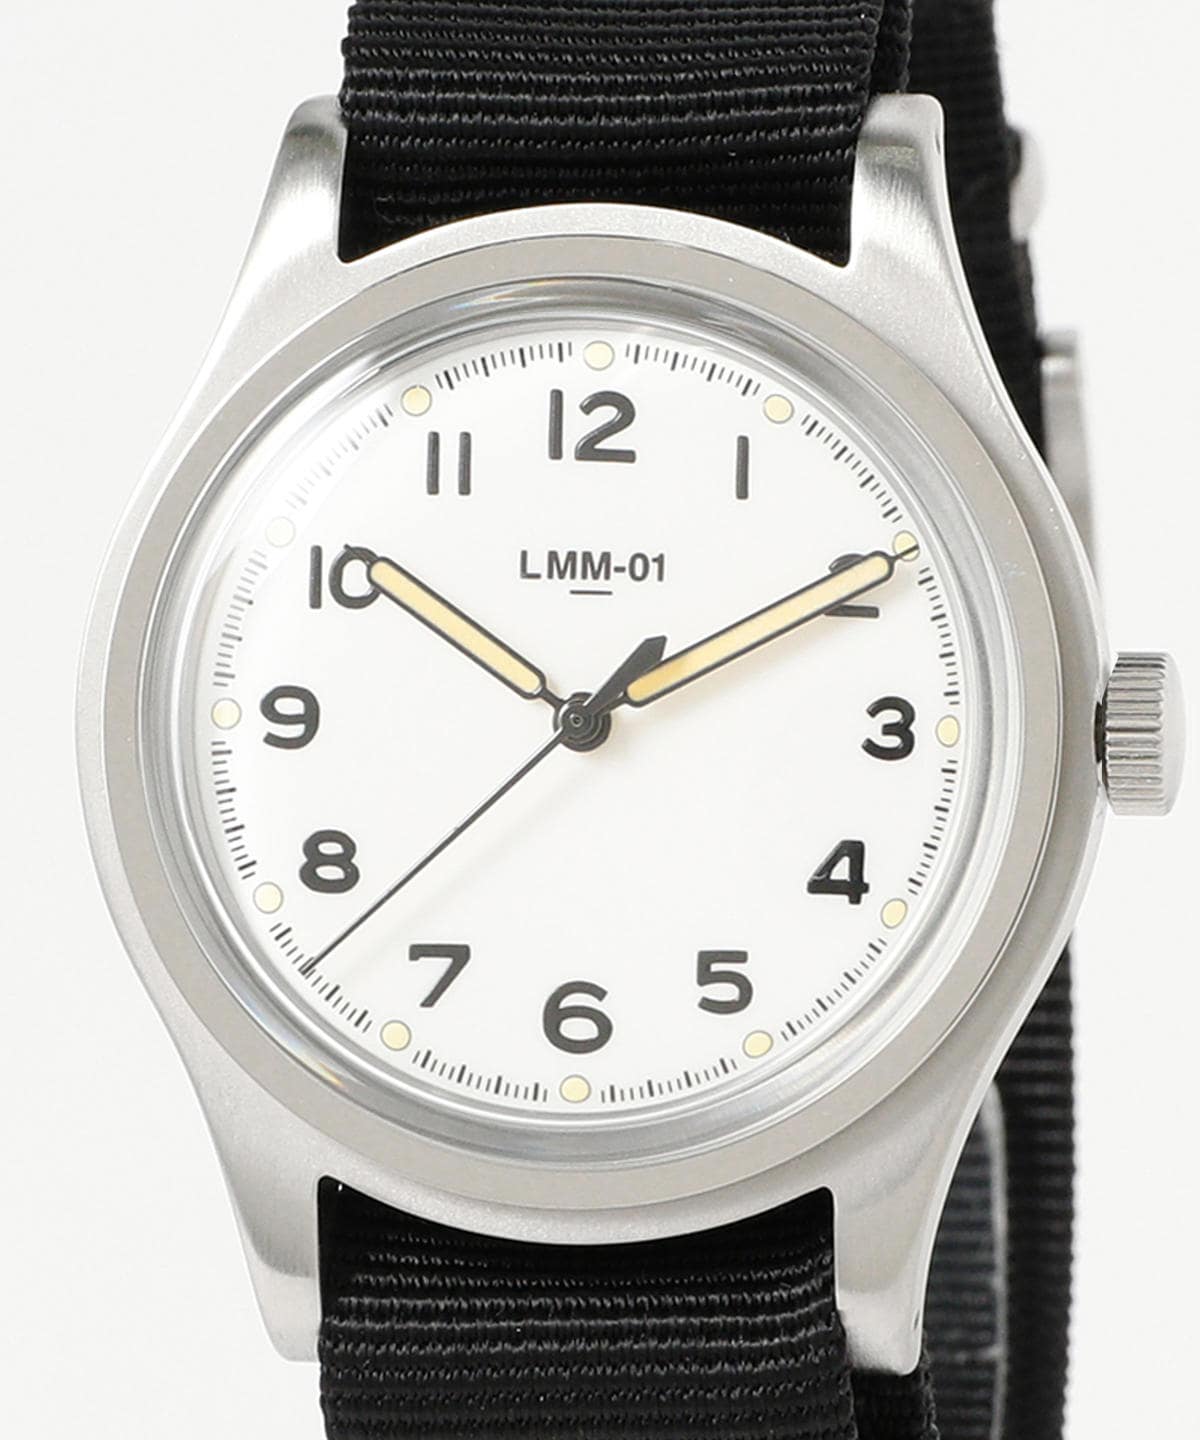 BEAMS BEAMS-01 / PROJECT SPECIAL “Field Watch” 3-hand watch (watch